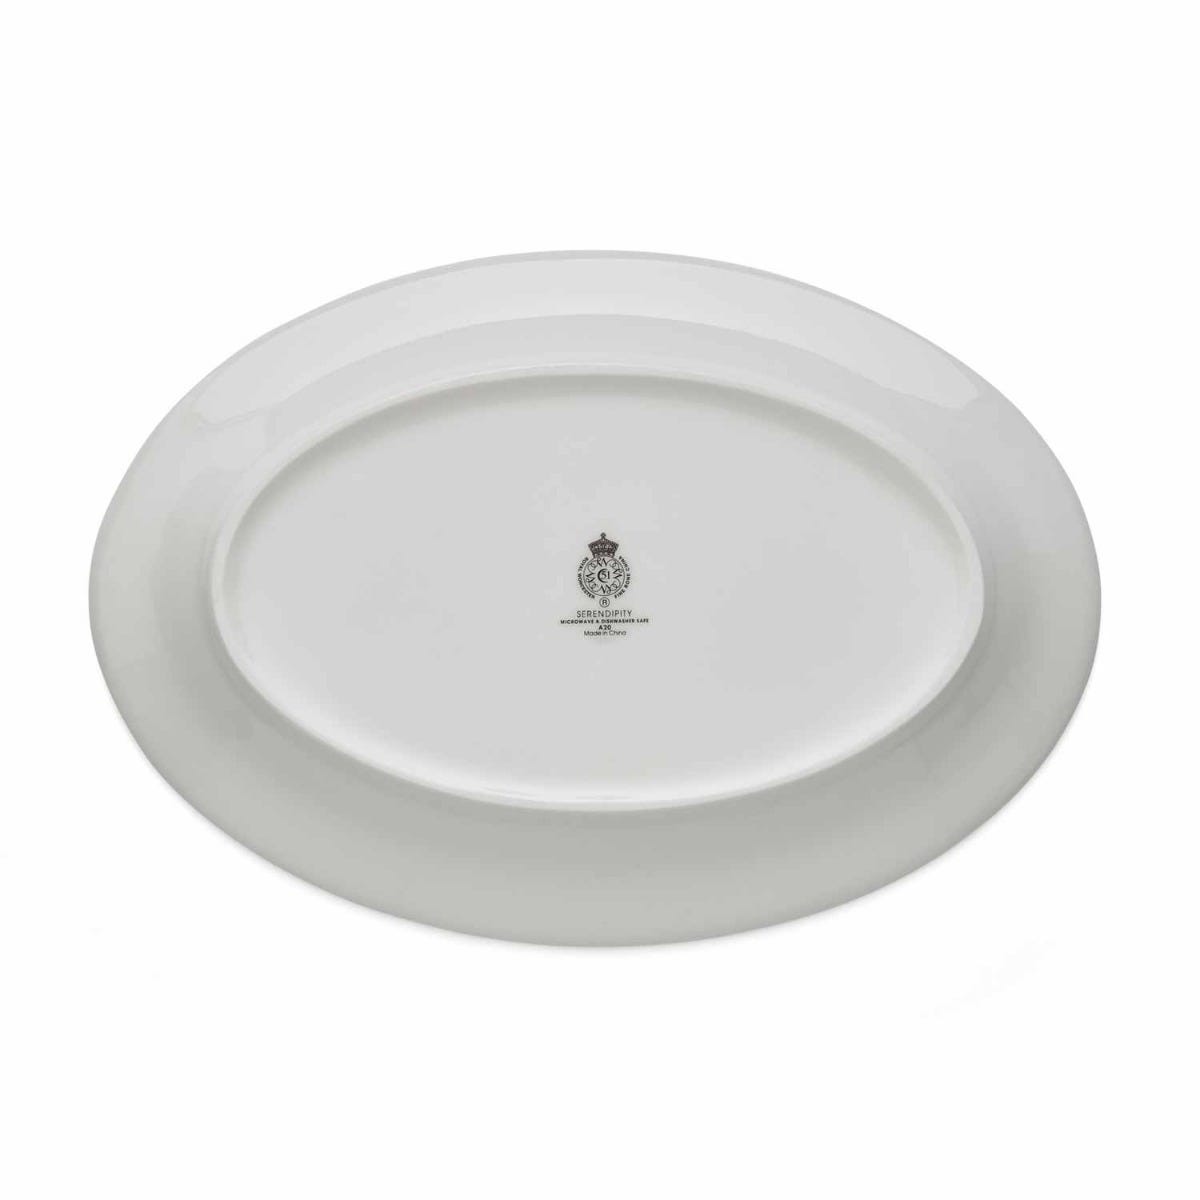 Serendipity Oval Platter